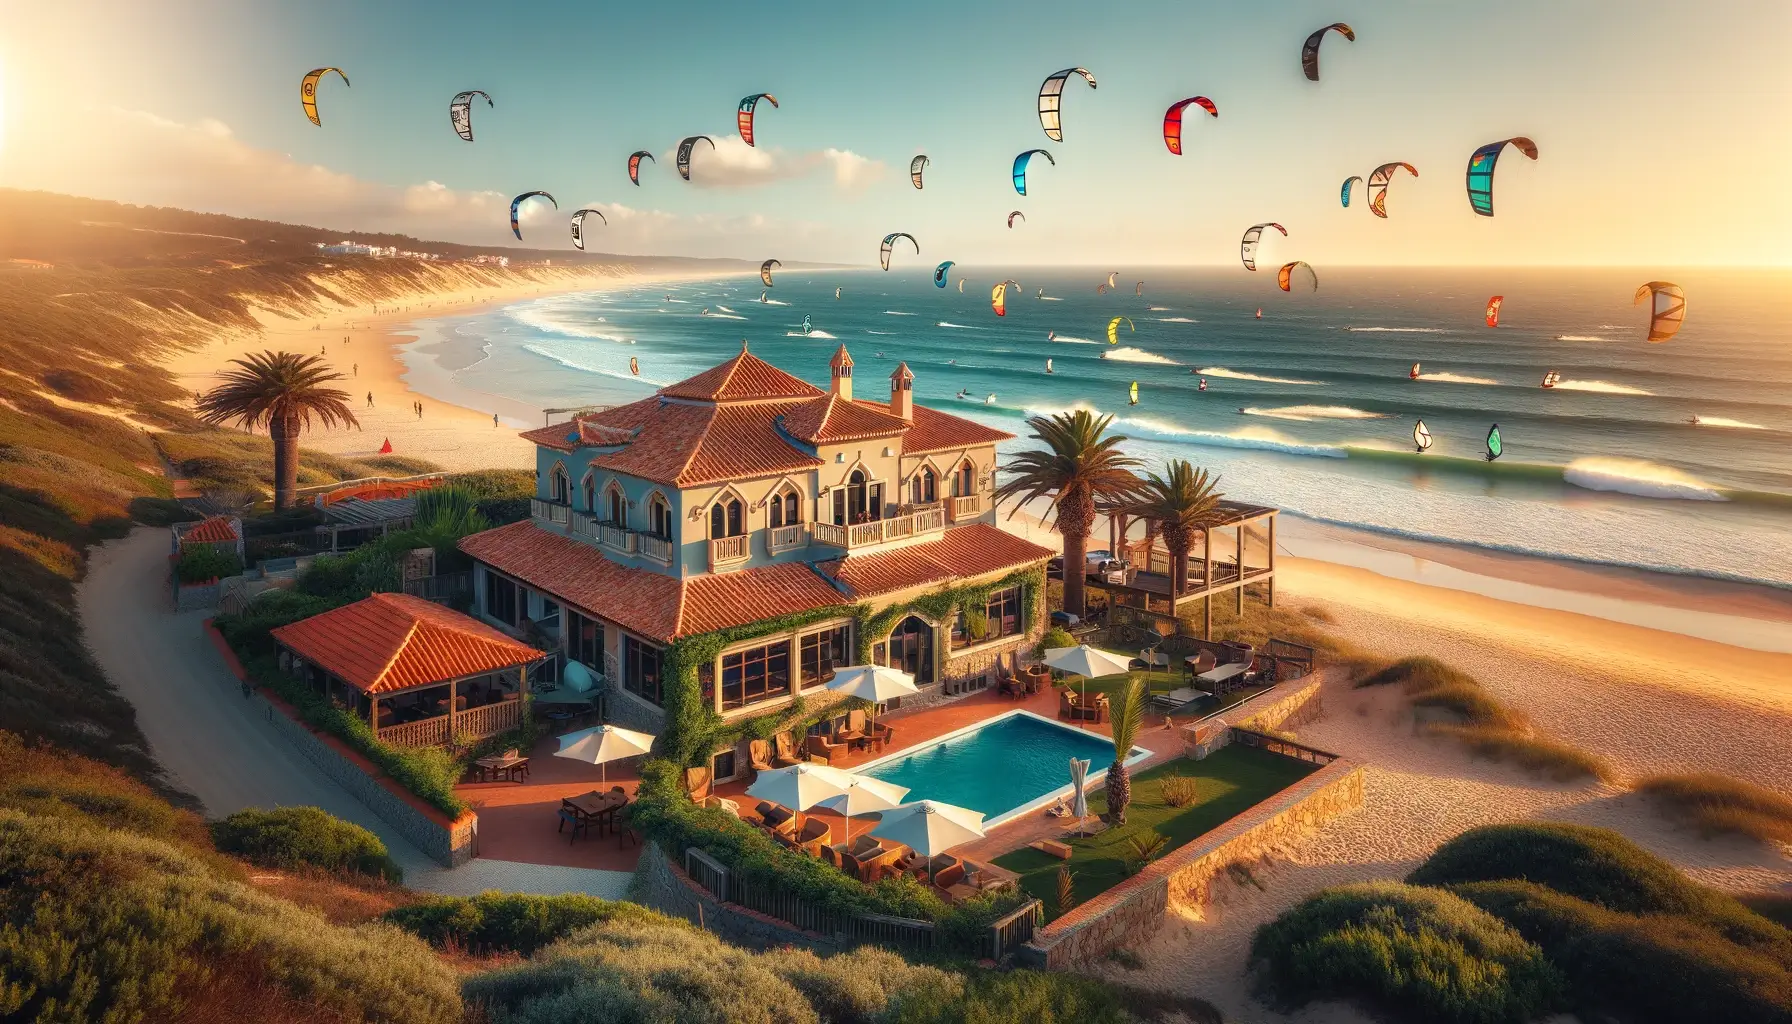 Best Kitesurfing Accommodation in Portugal